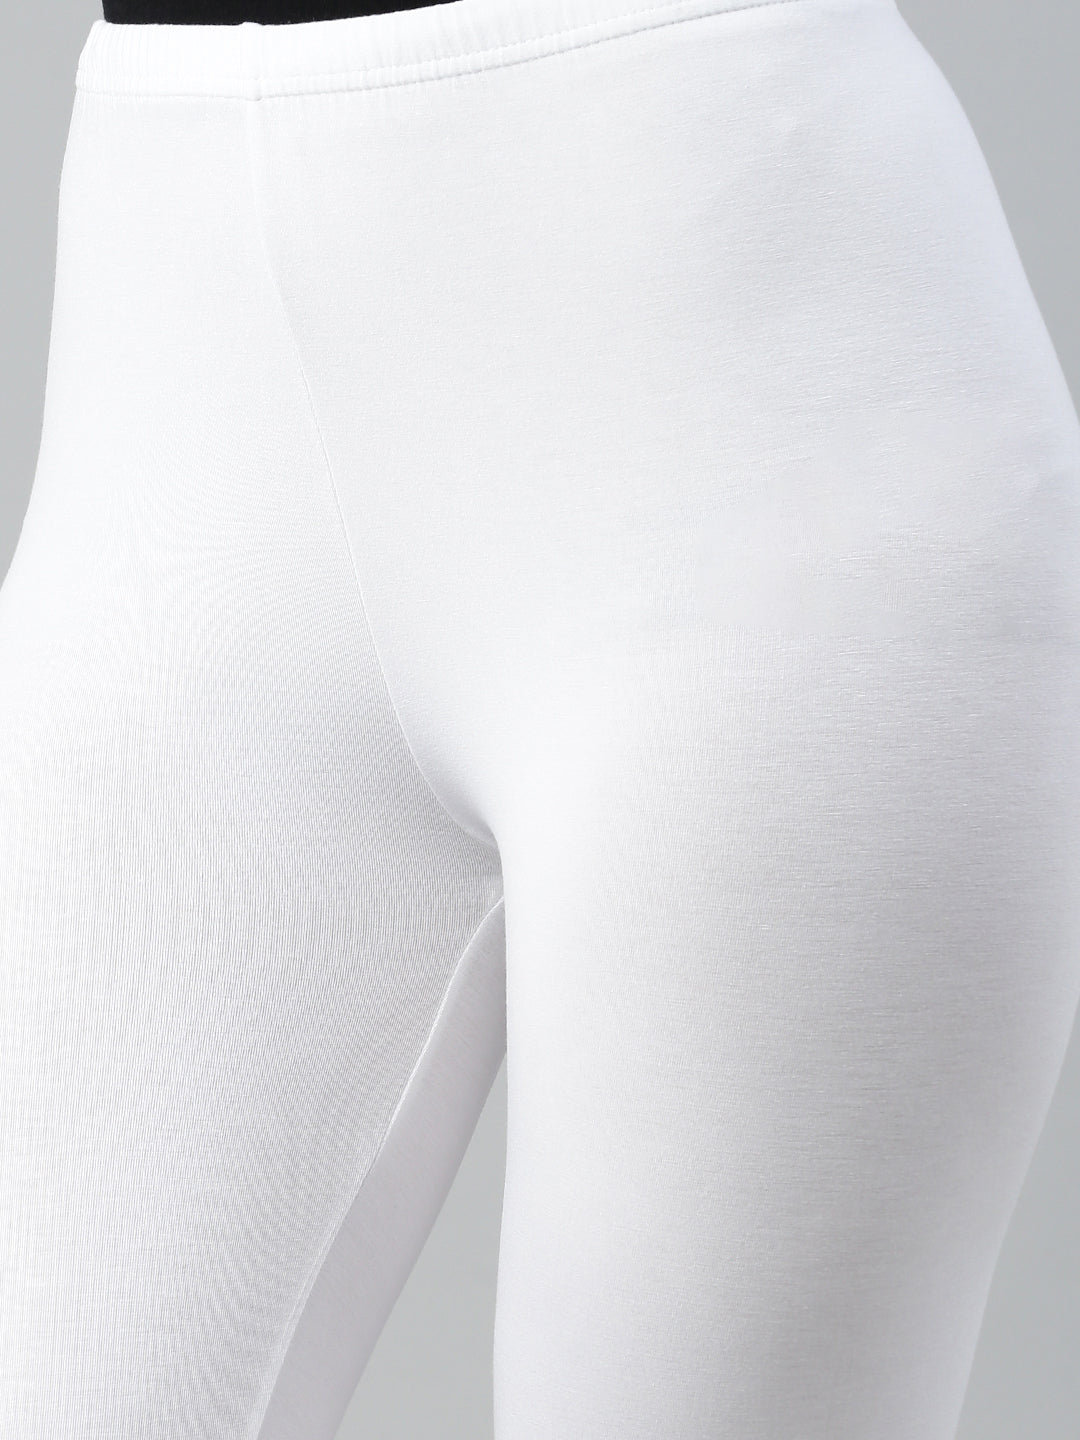 Buy prisma leggings white colour in India @ Limeroad